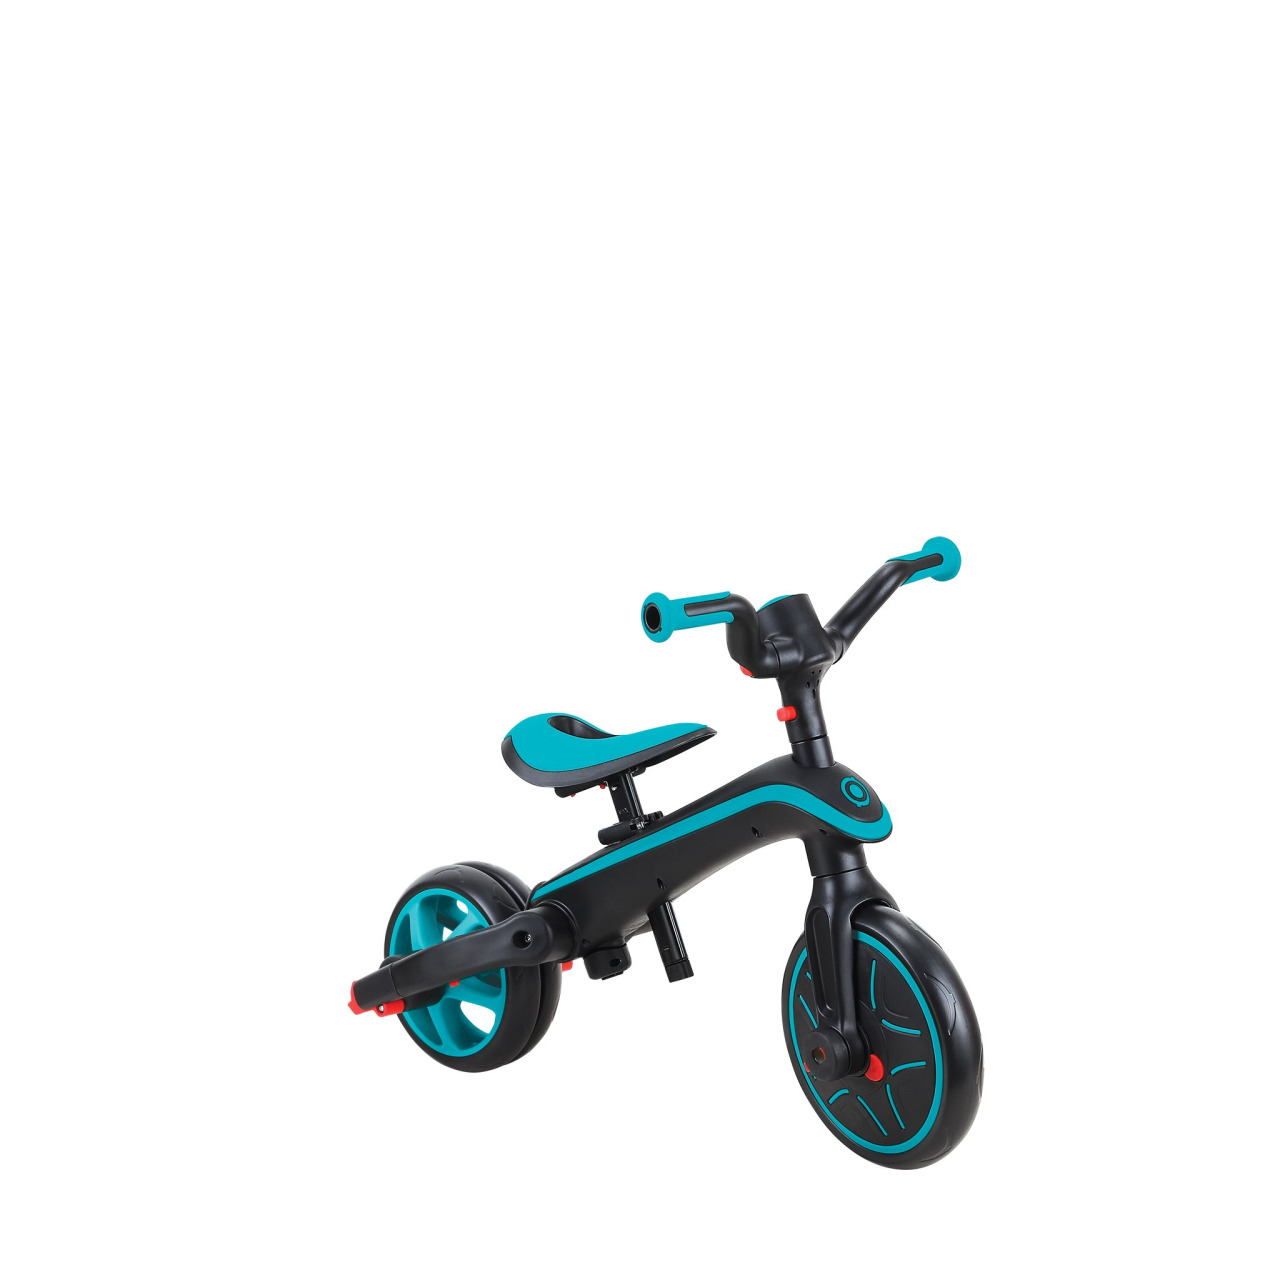 732 105 Foldable Tricycle Balance Bike